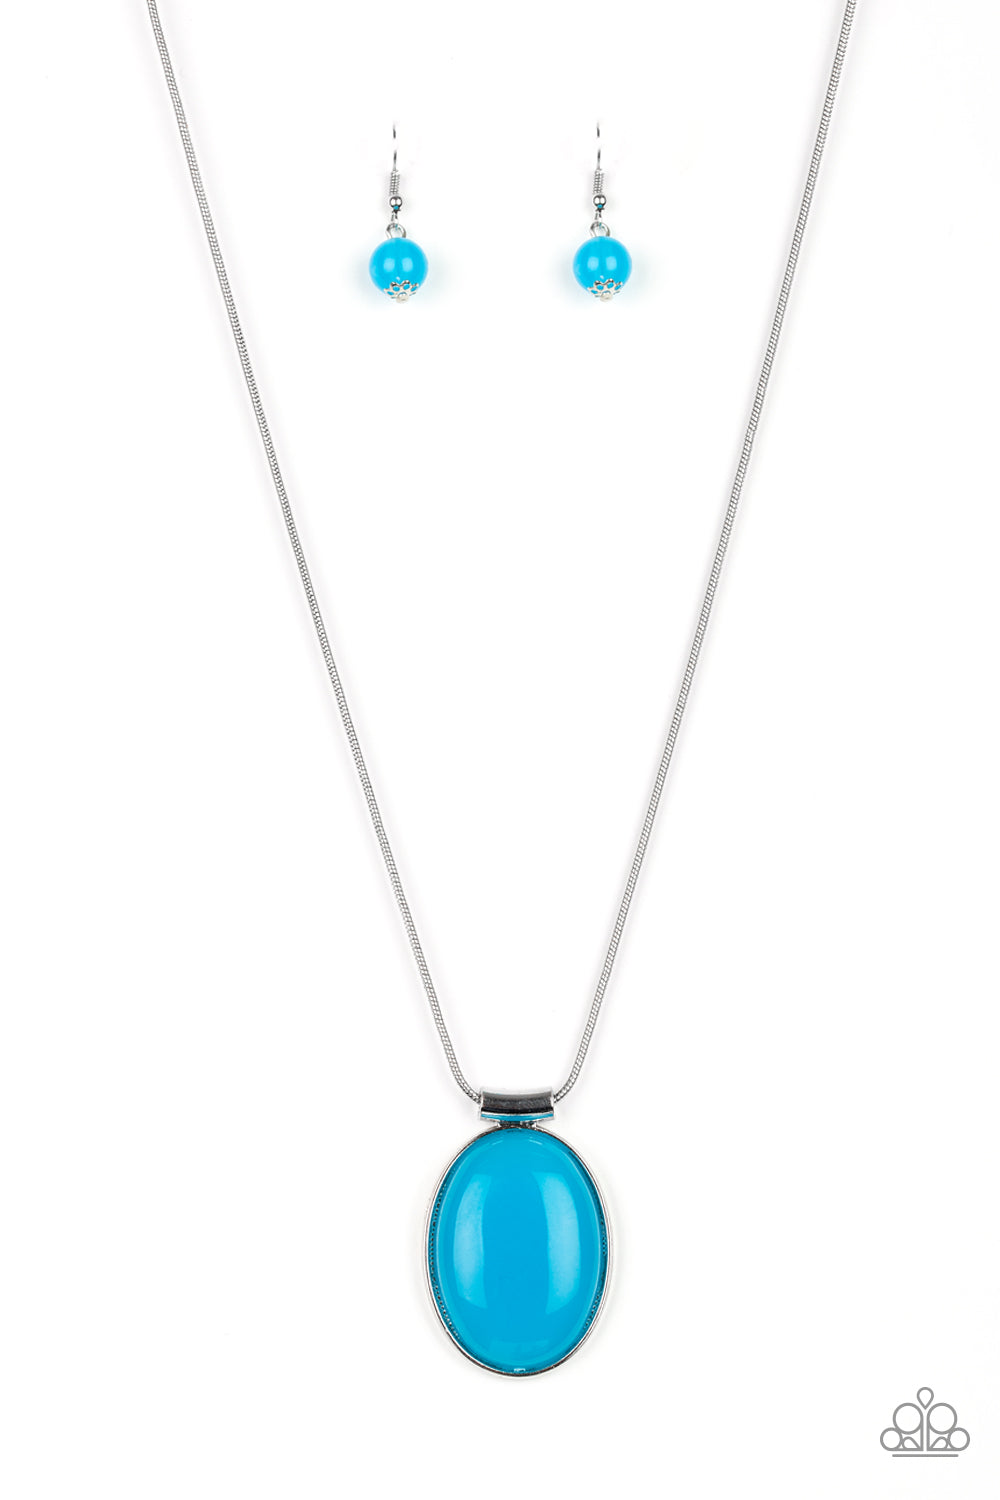 Rising Stardom - Blue necklace